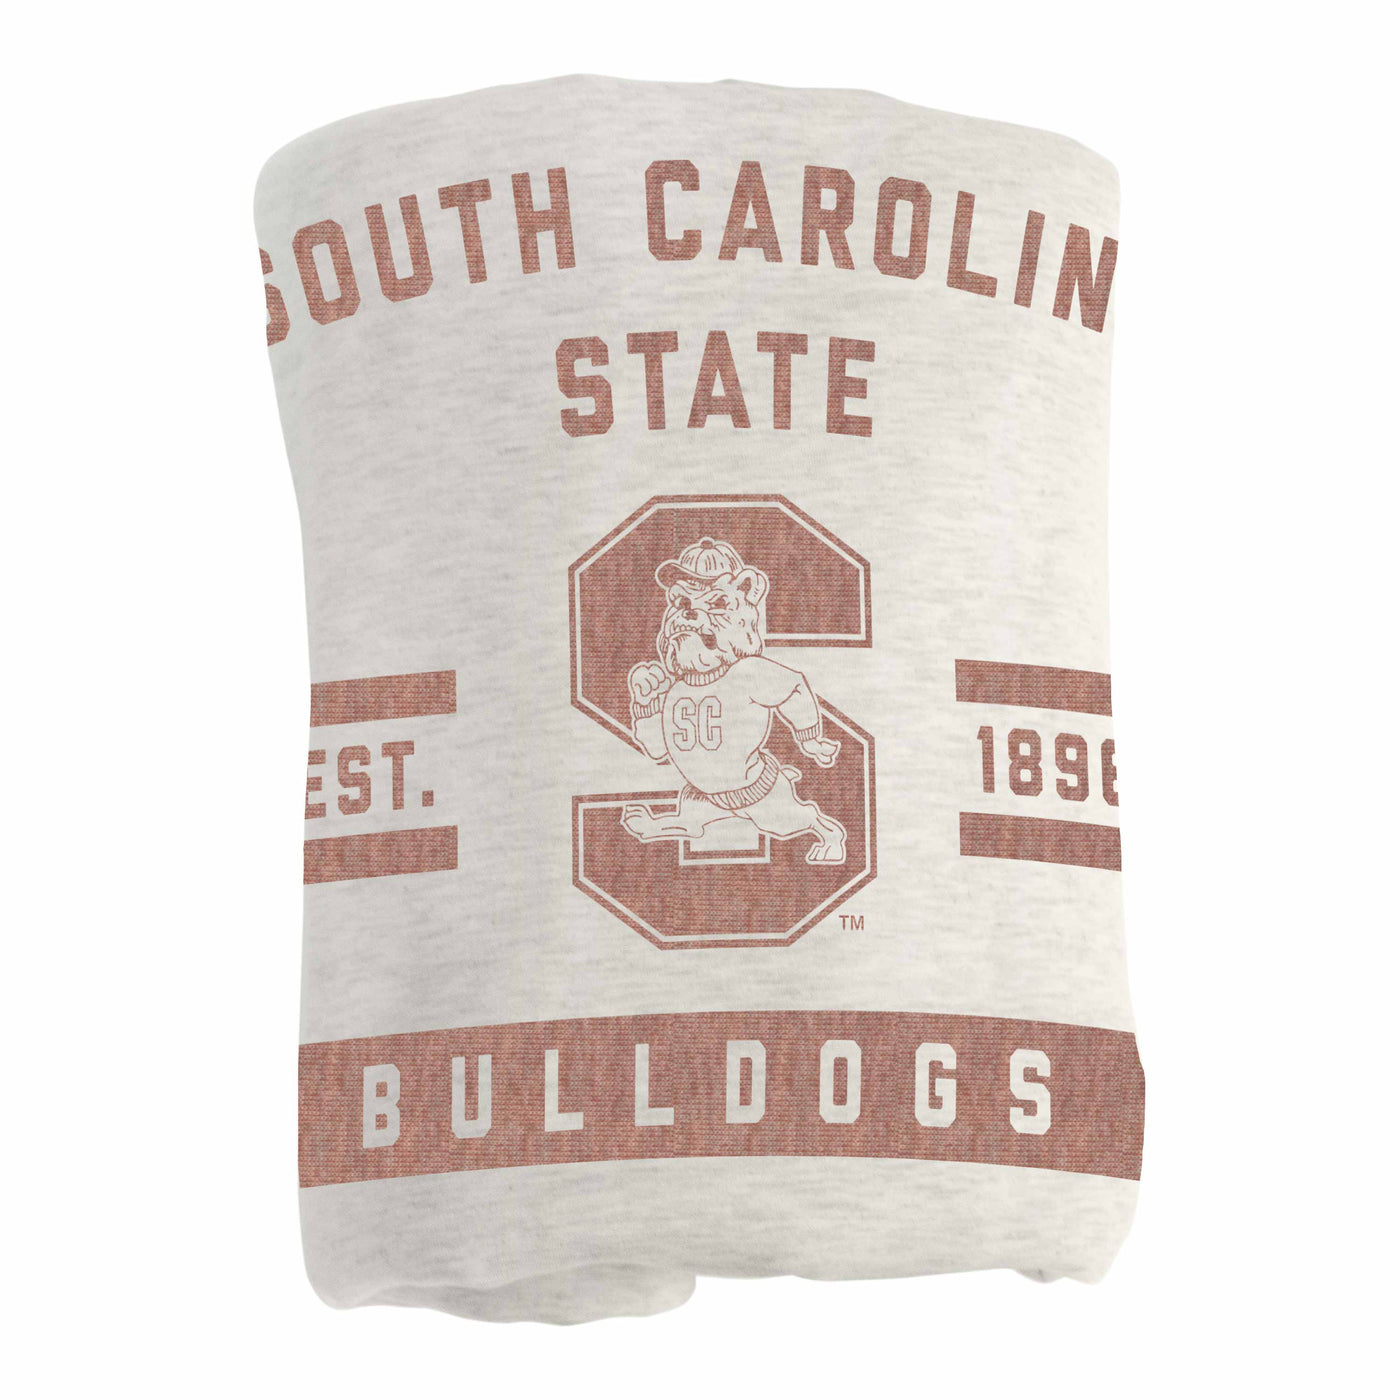 South Carolina State Oatmeal Sweatshirt Blanket